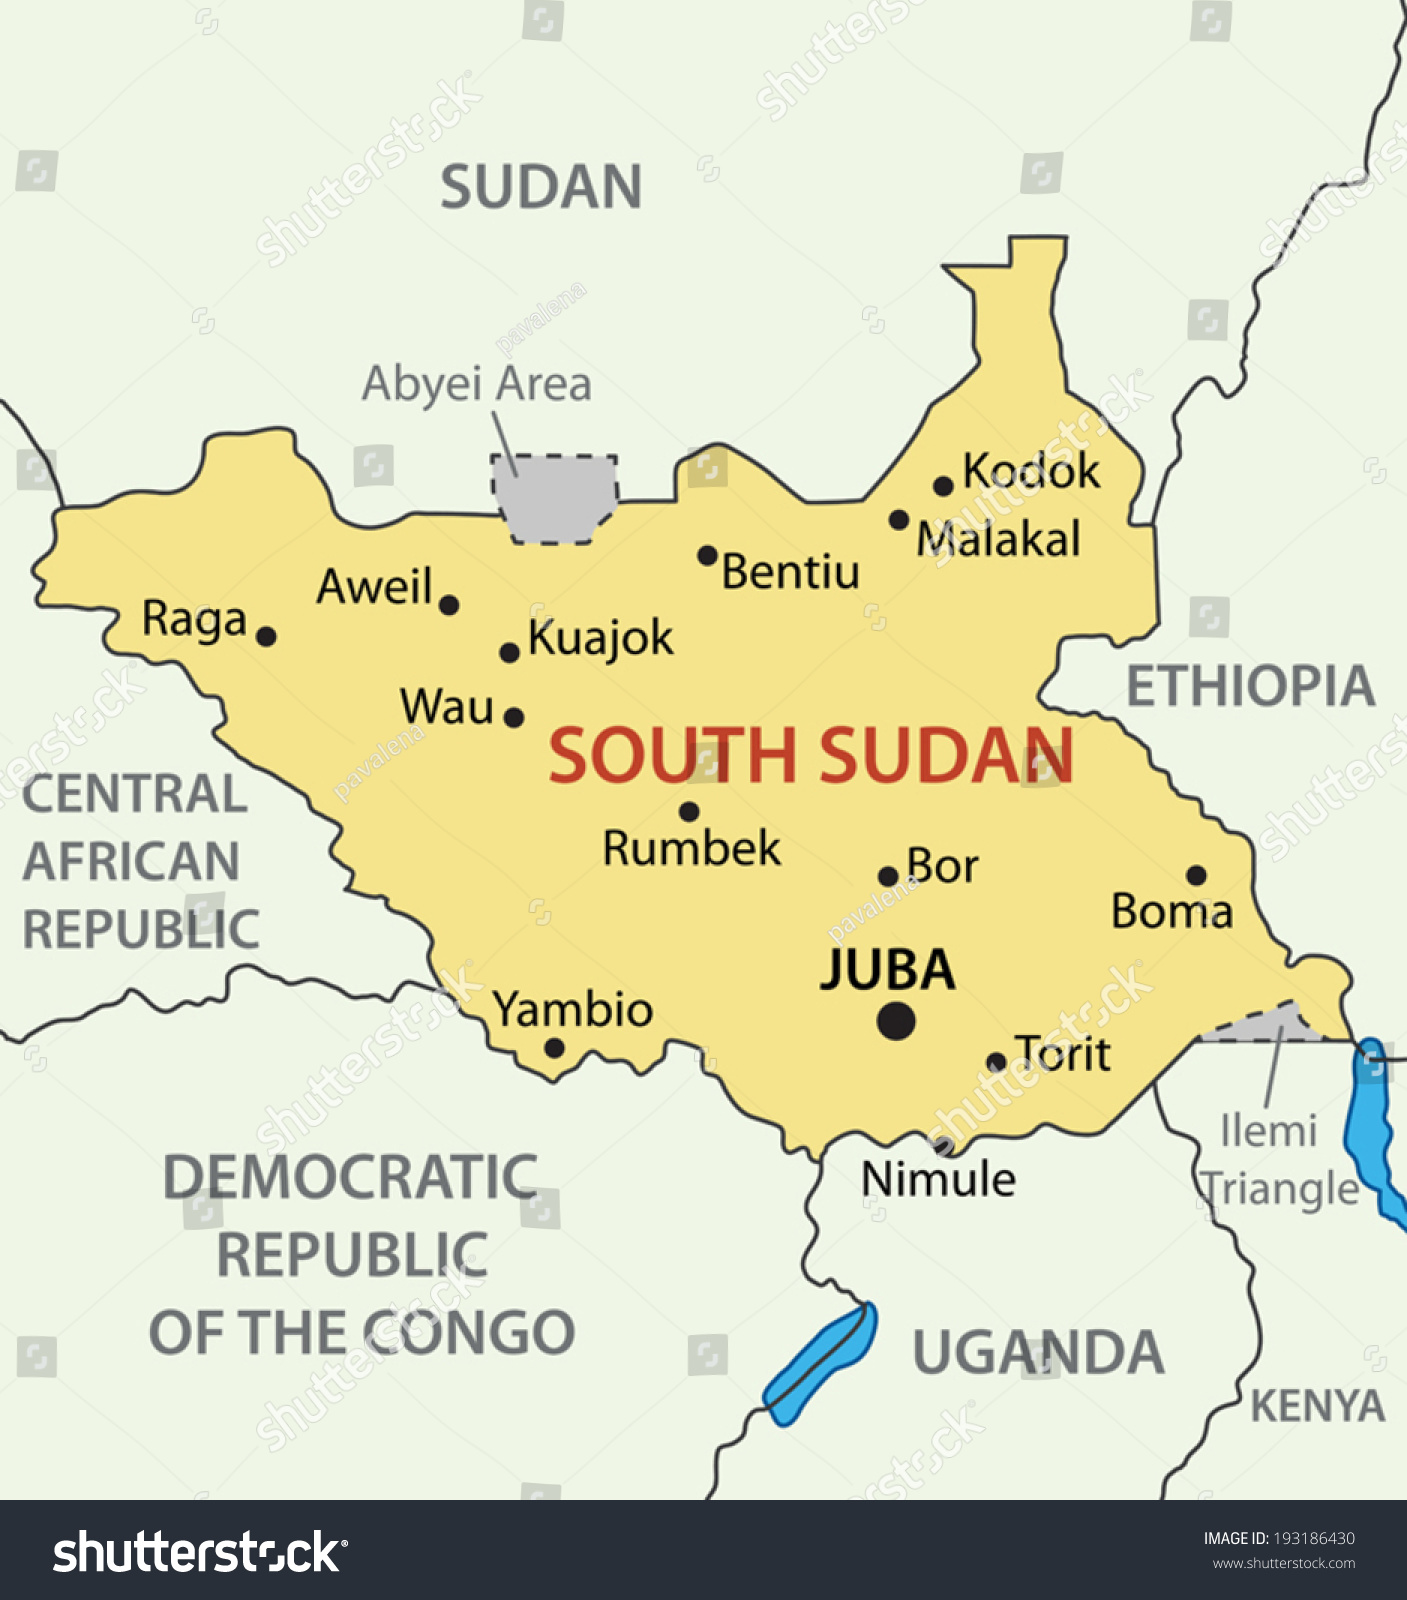 South Sudan gets $4 million AfDB grant to bolster COVID-19 response